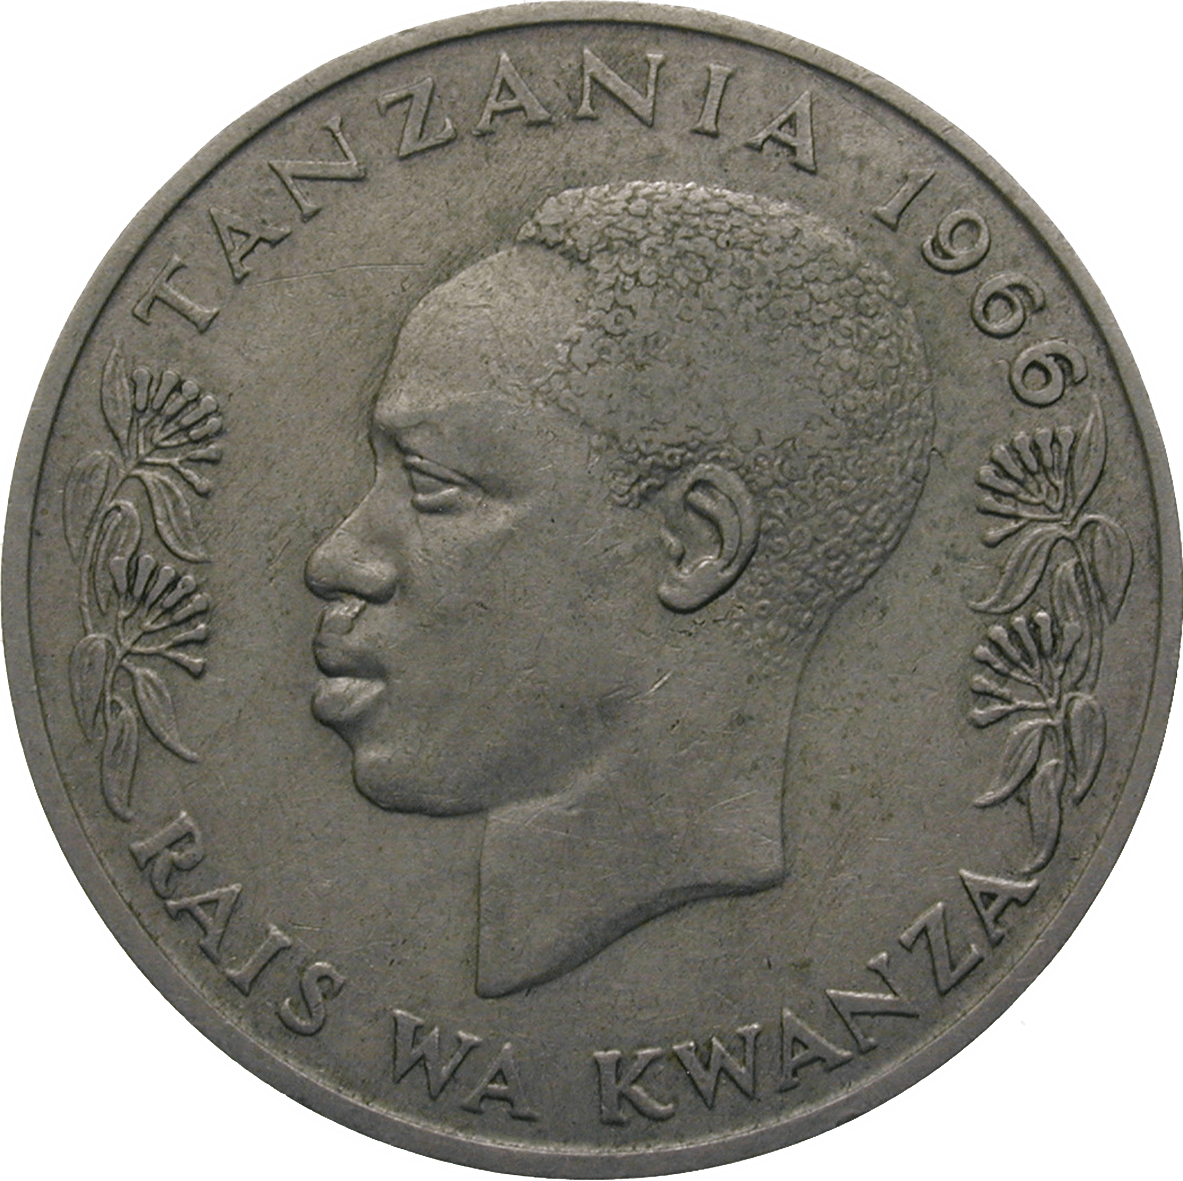 Republic of Tanzania, 1 Shilingi 1966 (obverse)